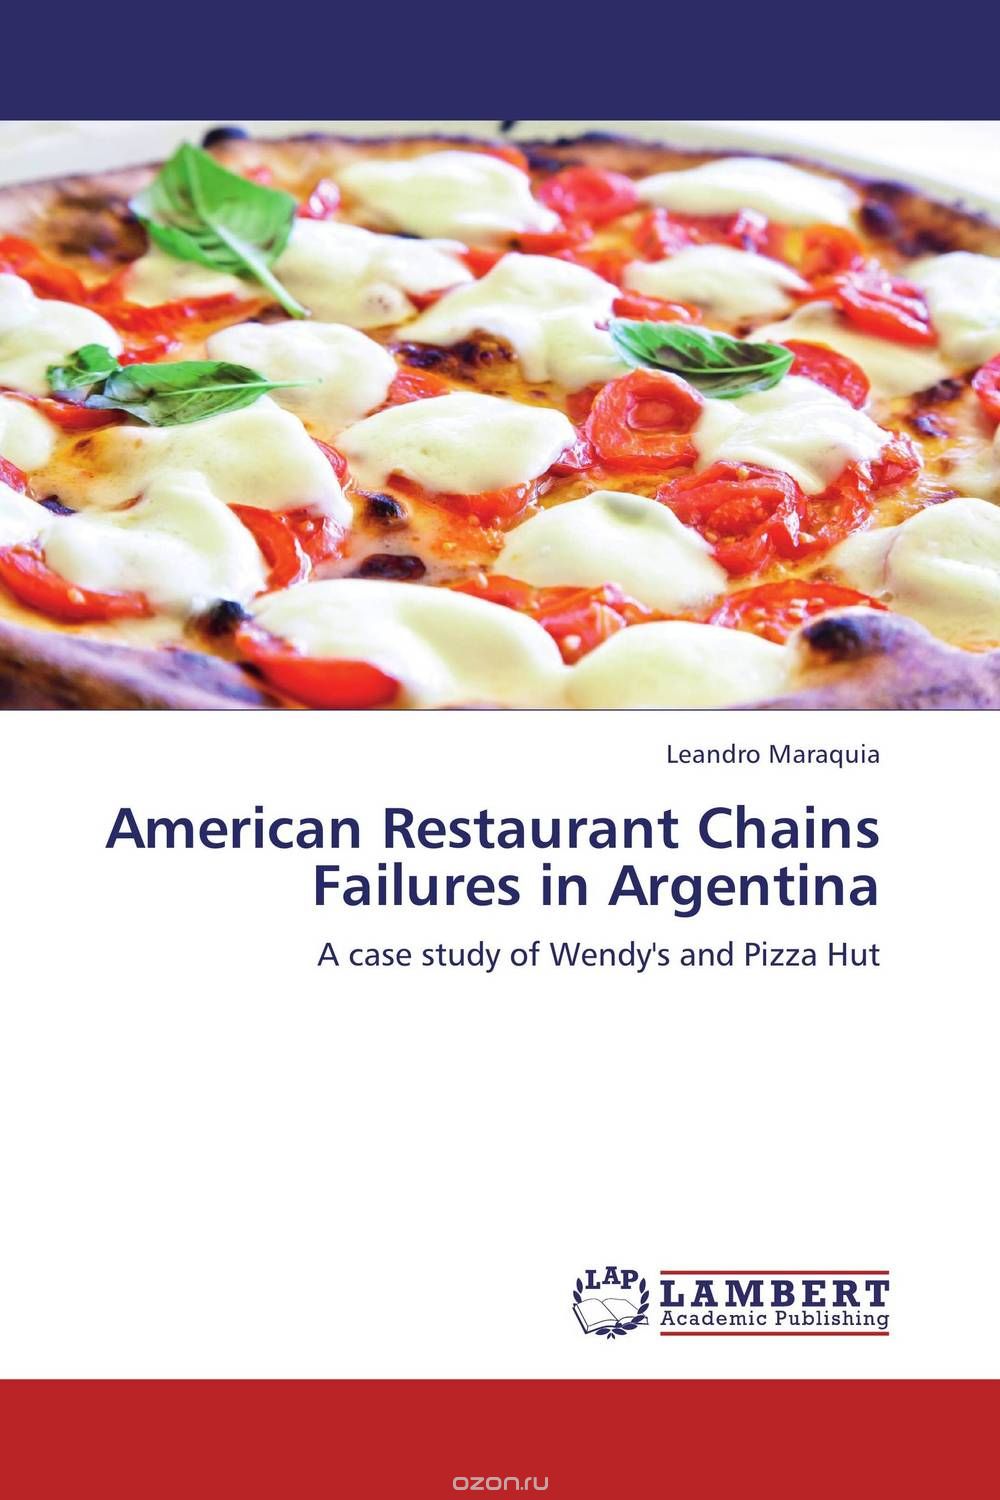 Скачать книгу "American Restaurant Chains Failures in Argentina"